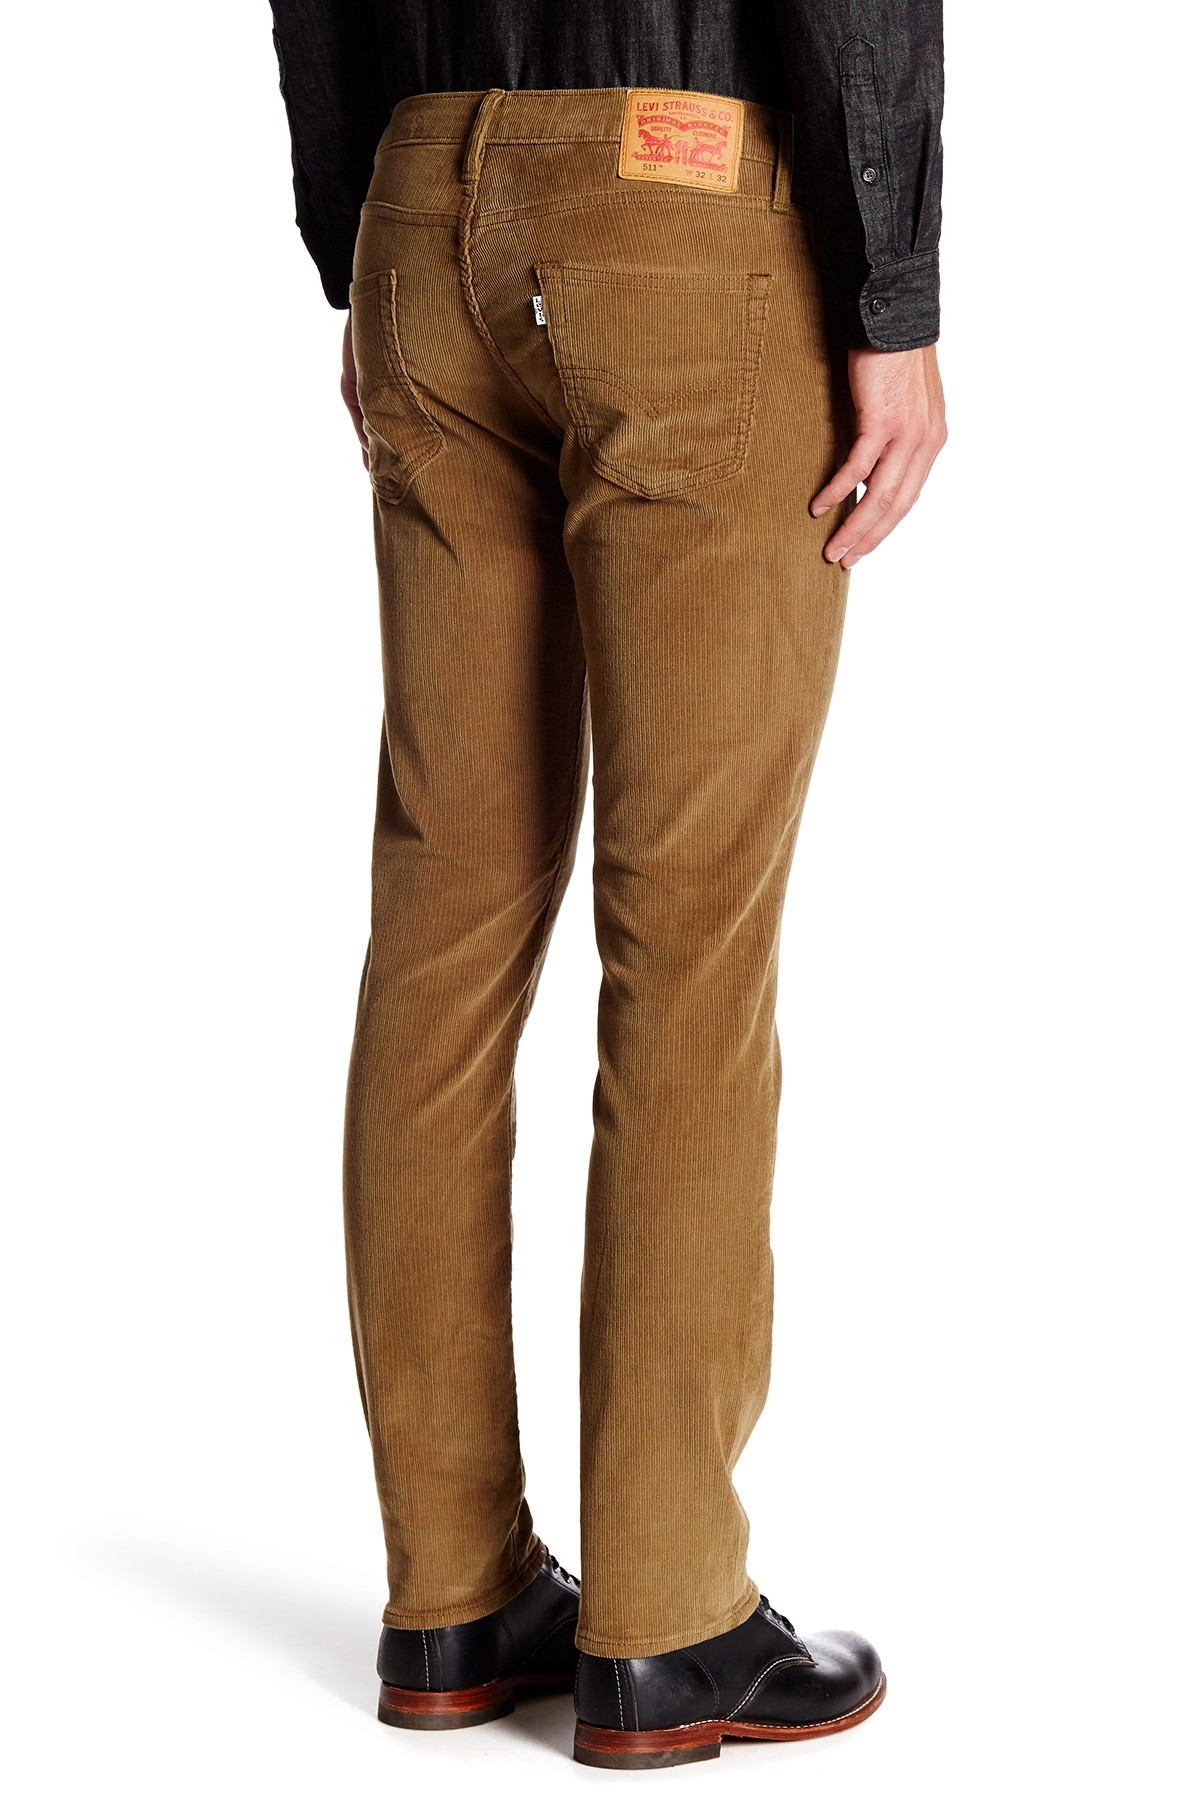 Levi's 511 Slim Fit Cougar Rinsed Corduroy Pant in Brown for Men - Lyst